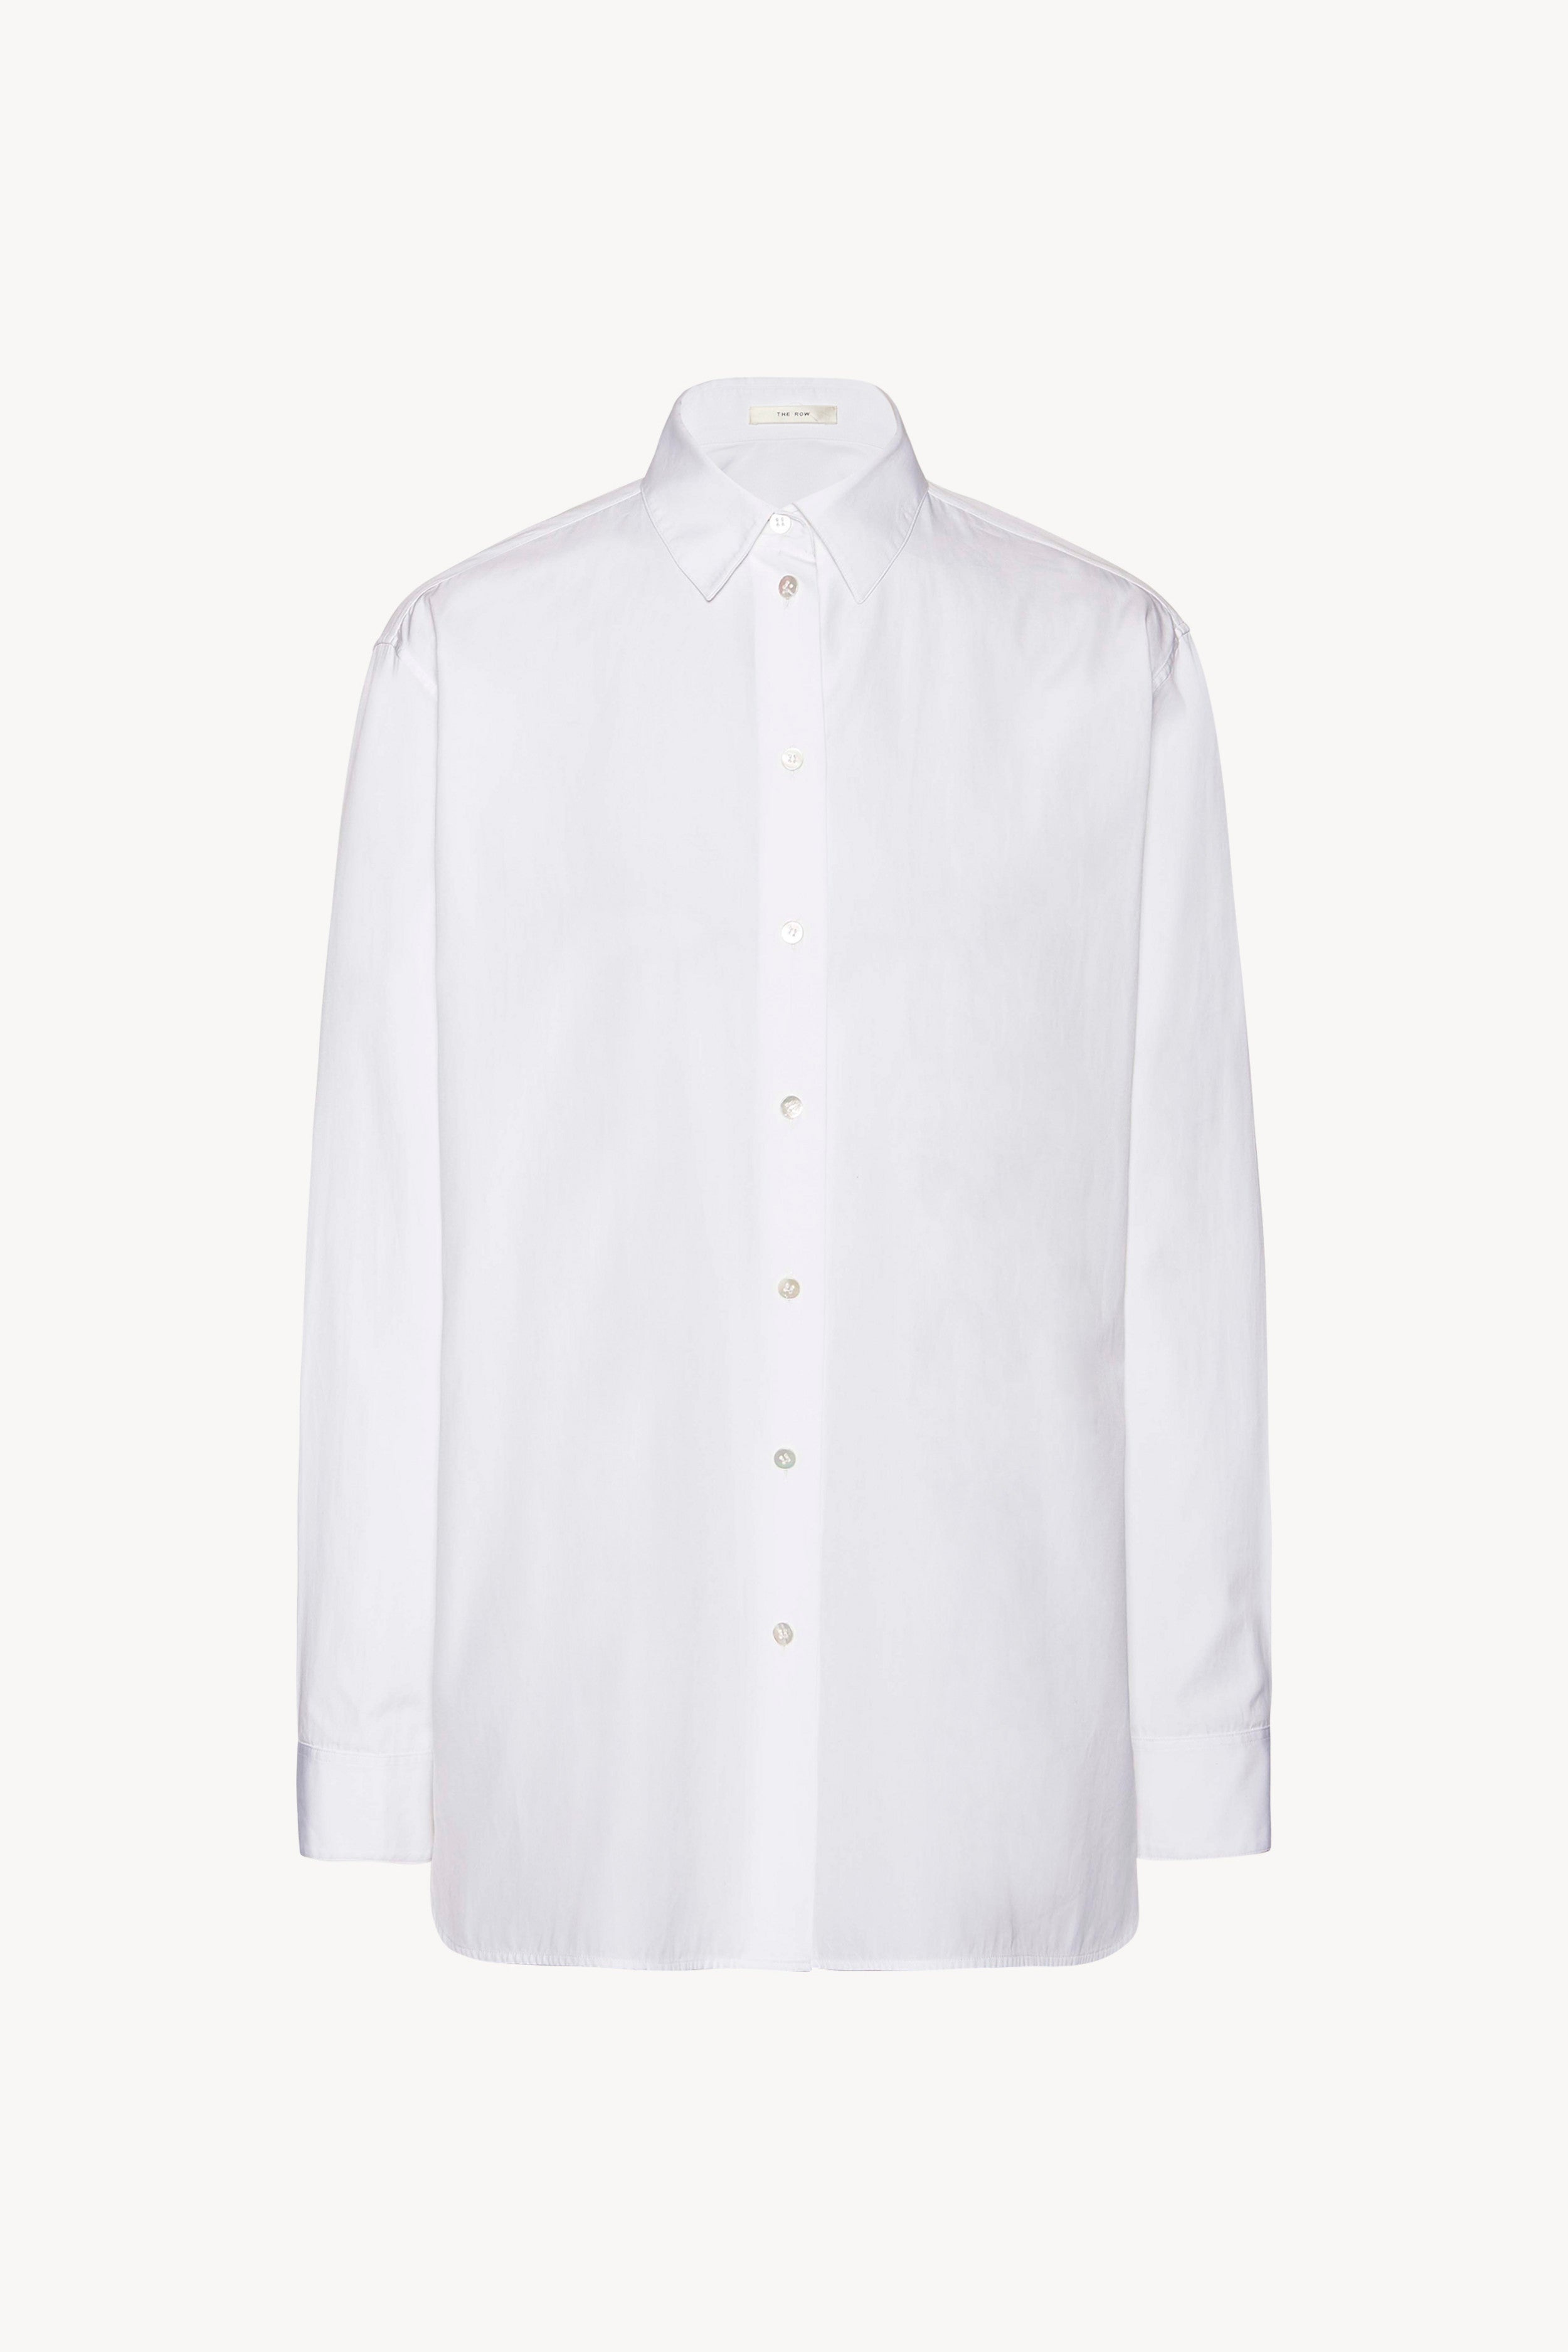 Sisilia Shirt in Cotton - 1